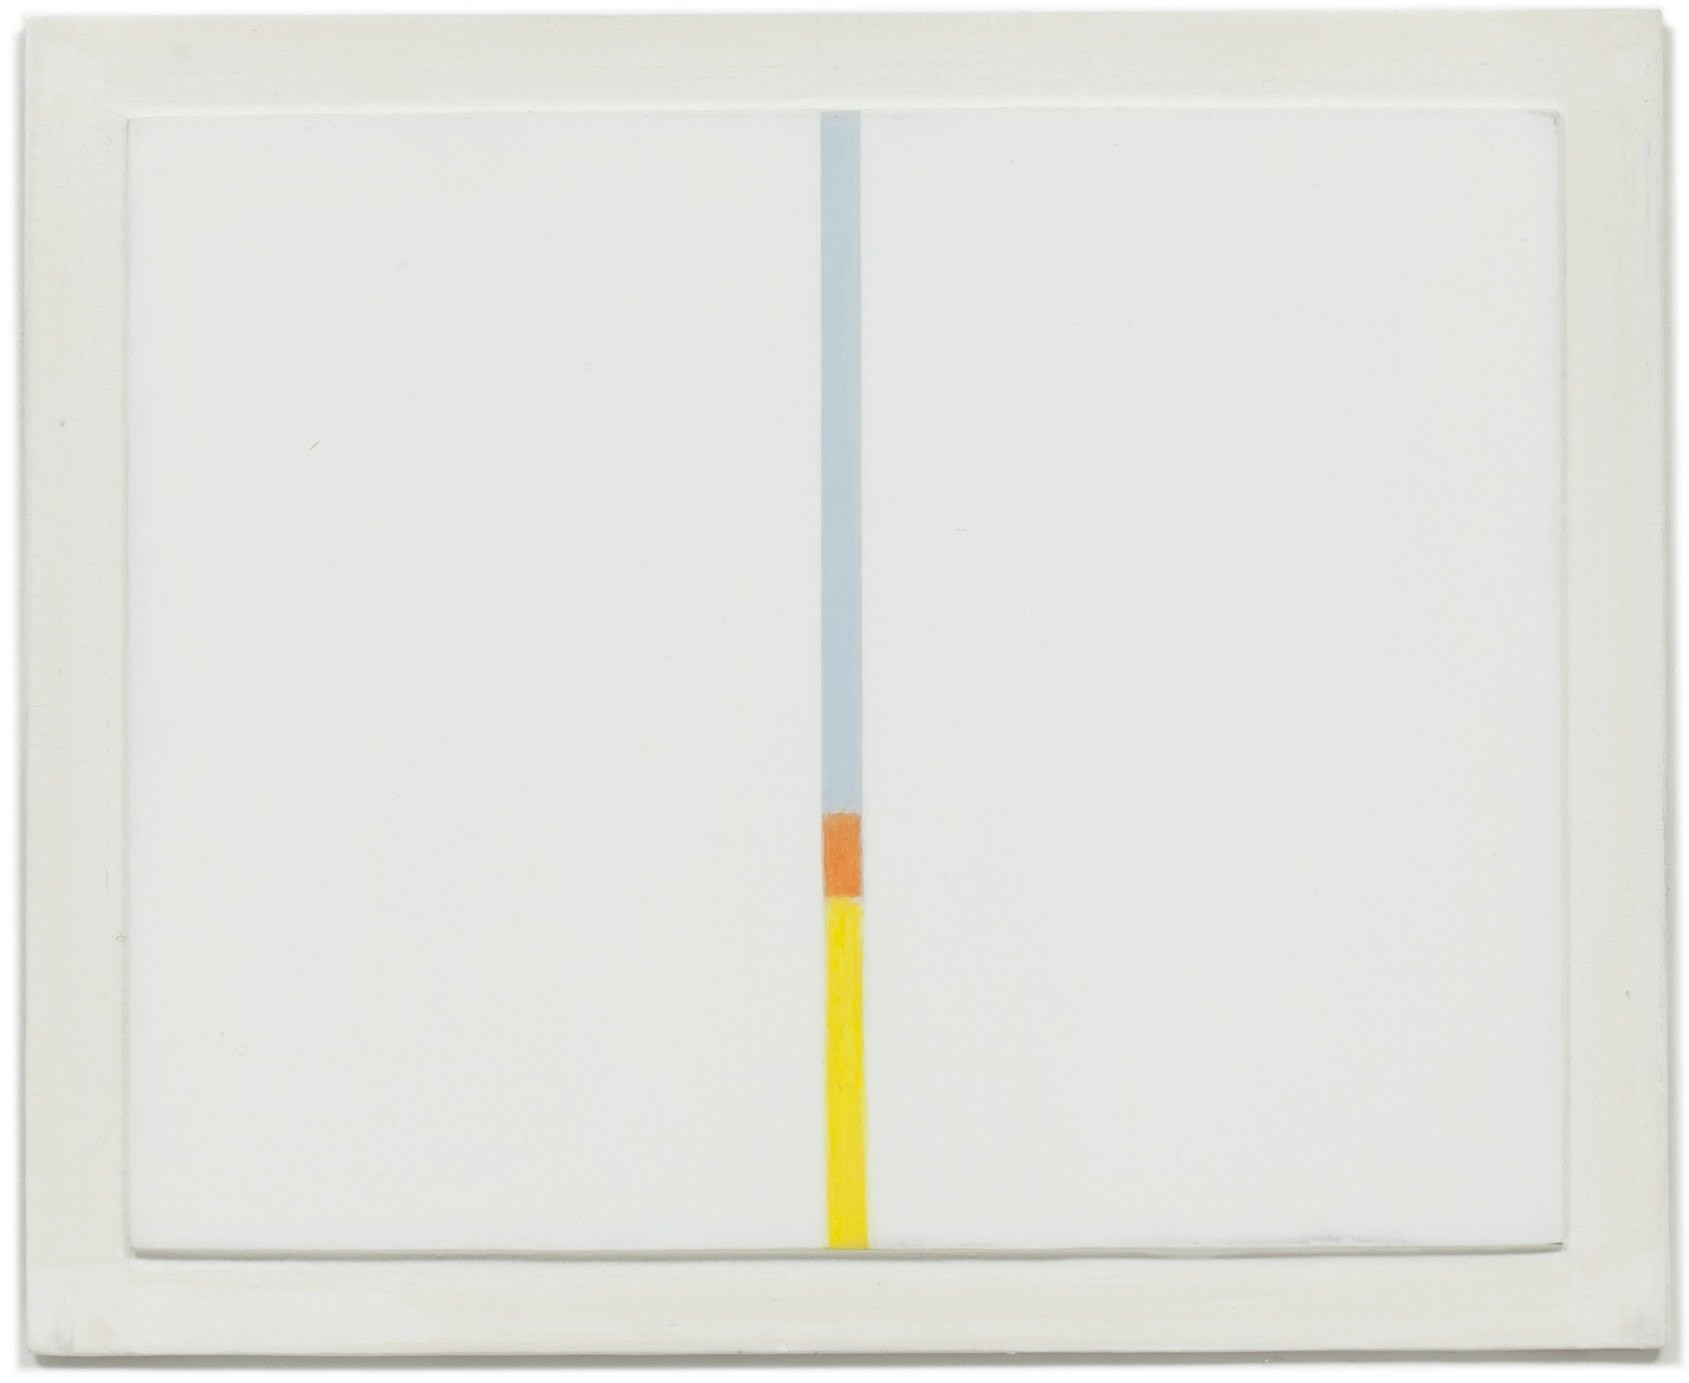 Antonio Calderara: Tensione verticale azzurro, rosso, giallo, 1968, Ölfarben auf Holz, 13 x 16 cm, Privatsammlung, Photographie: Ivan Baschang, Nadja Mair